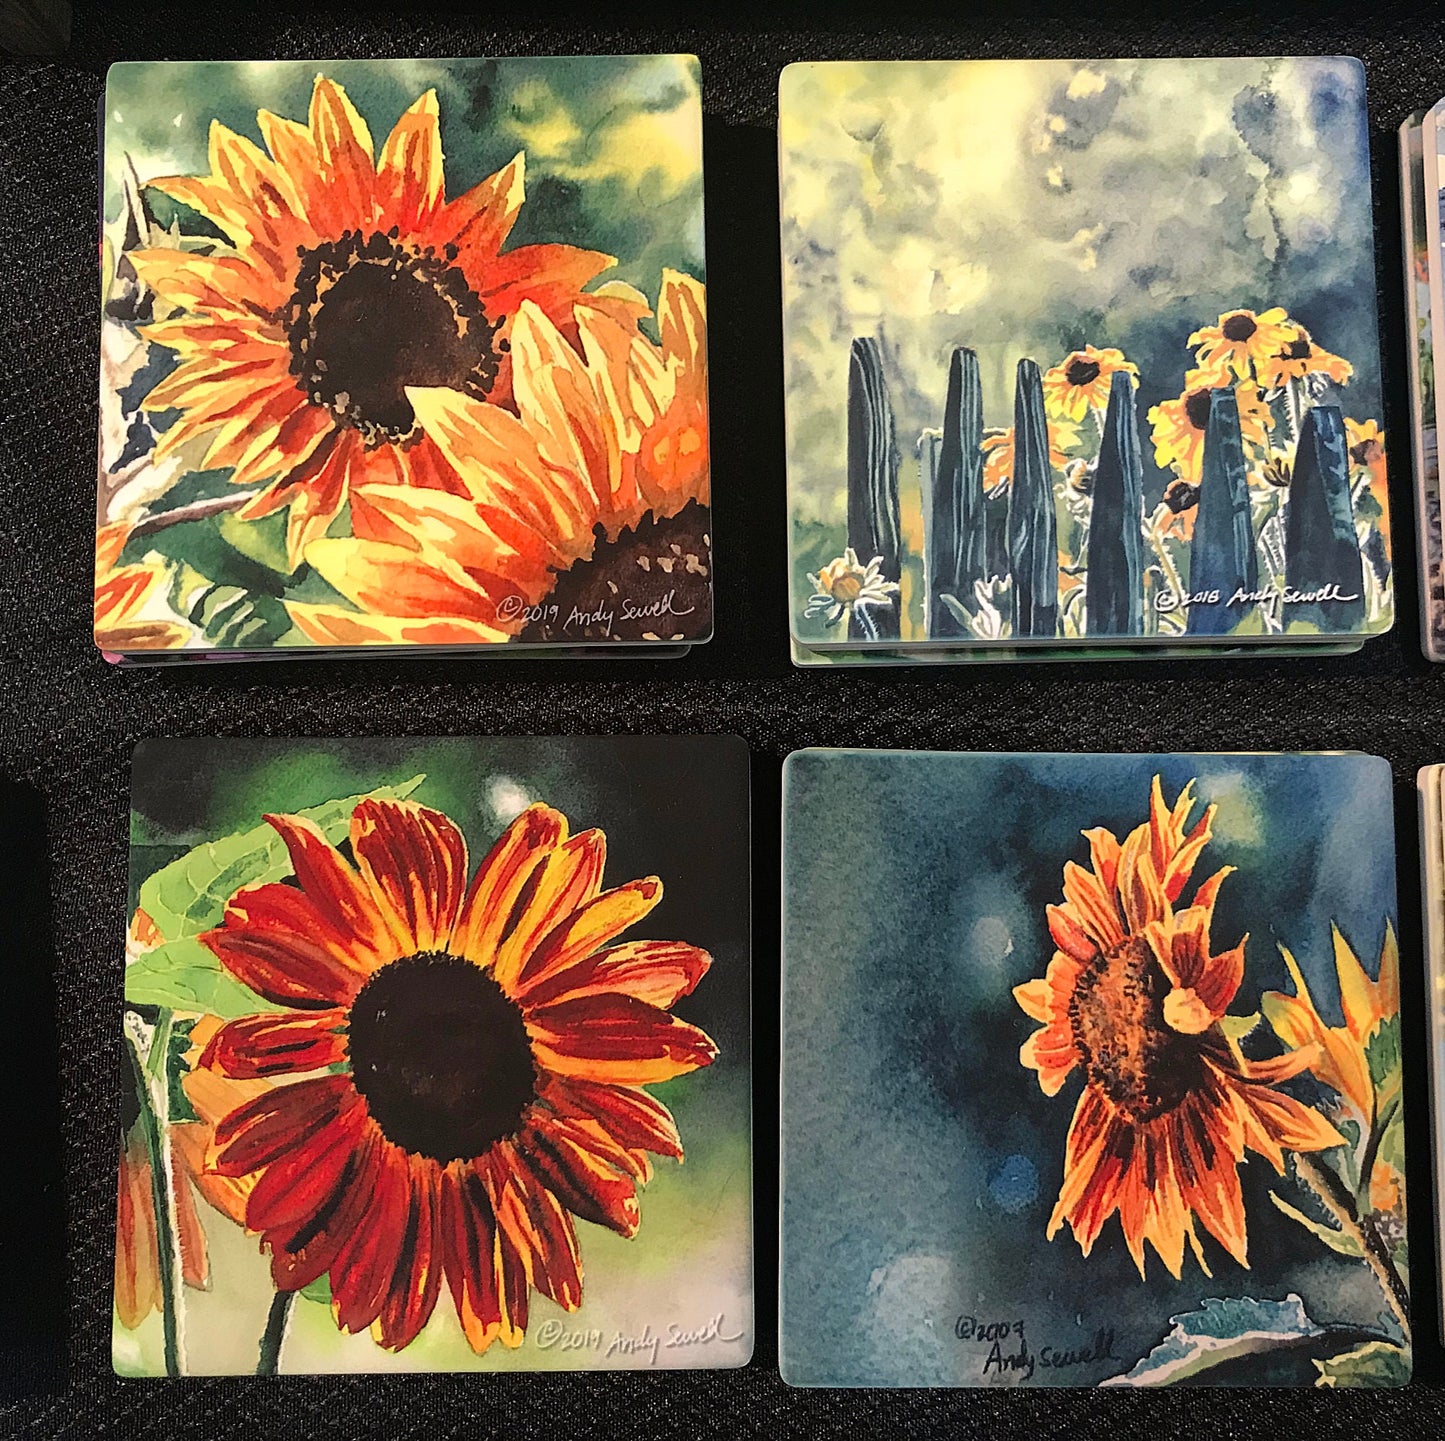 Sunflower art theme coasters set of 4 - Sandstone feel, matte ceramic coaster set